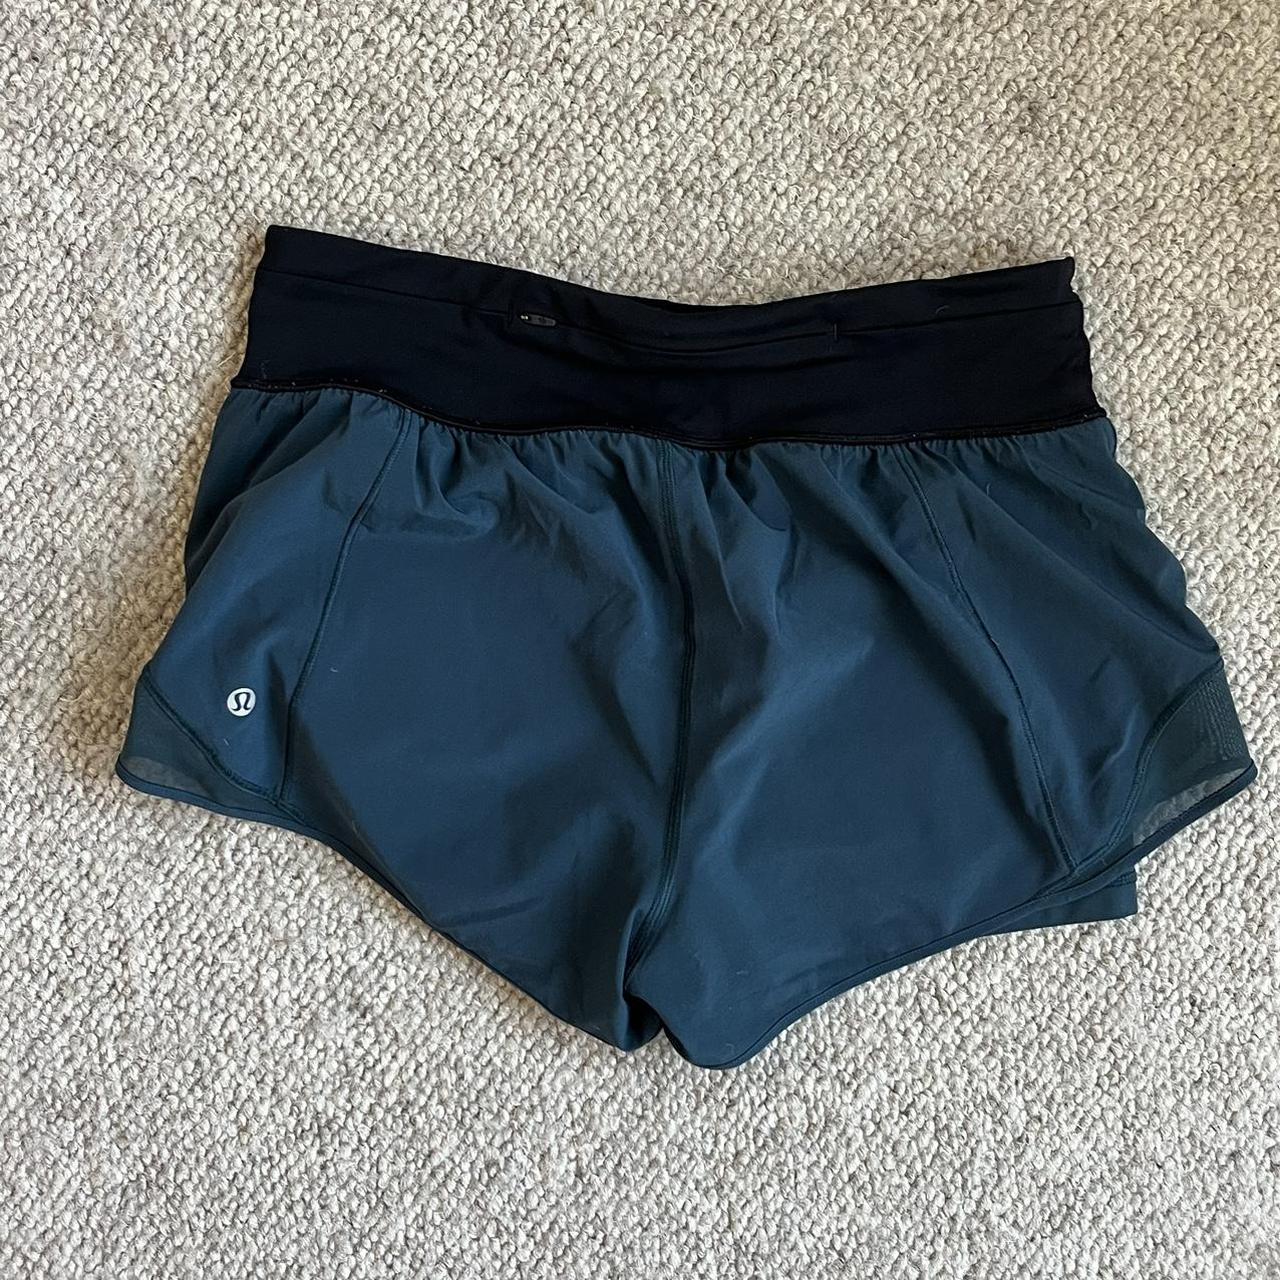 Lululemon lines running shorts Built in spandex and - Depop